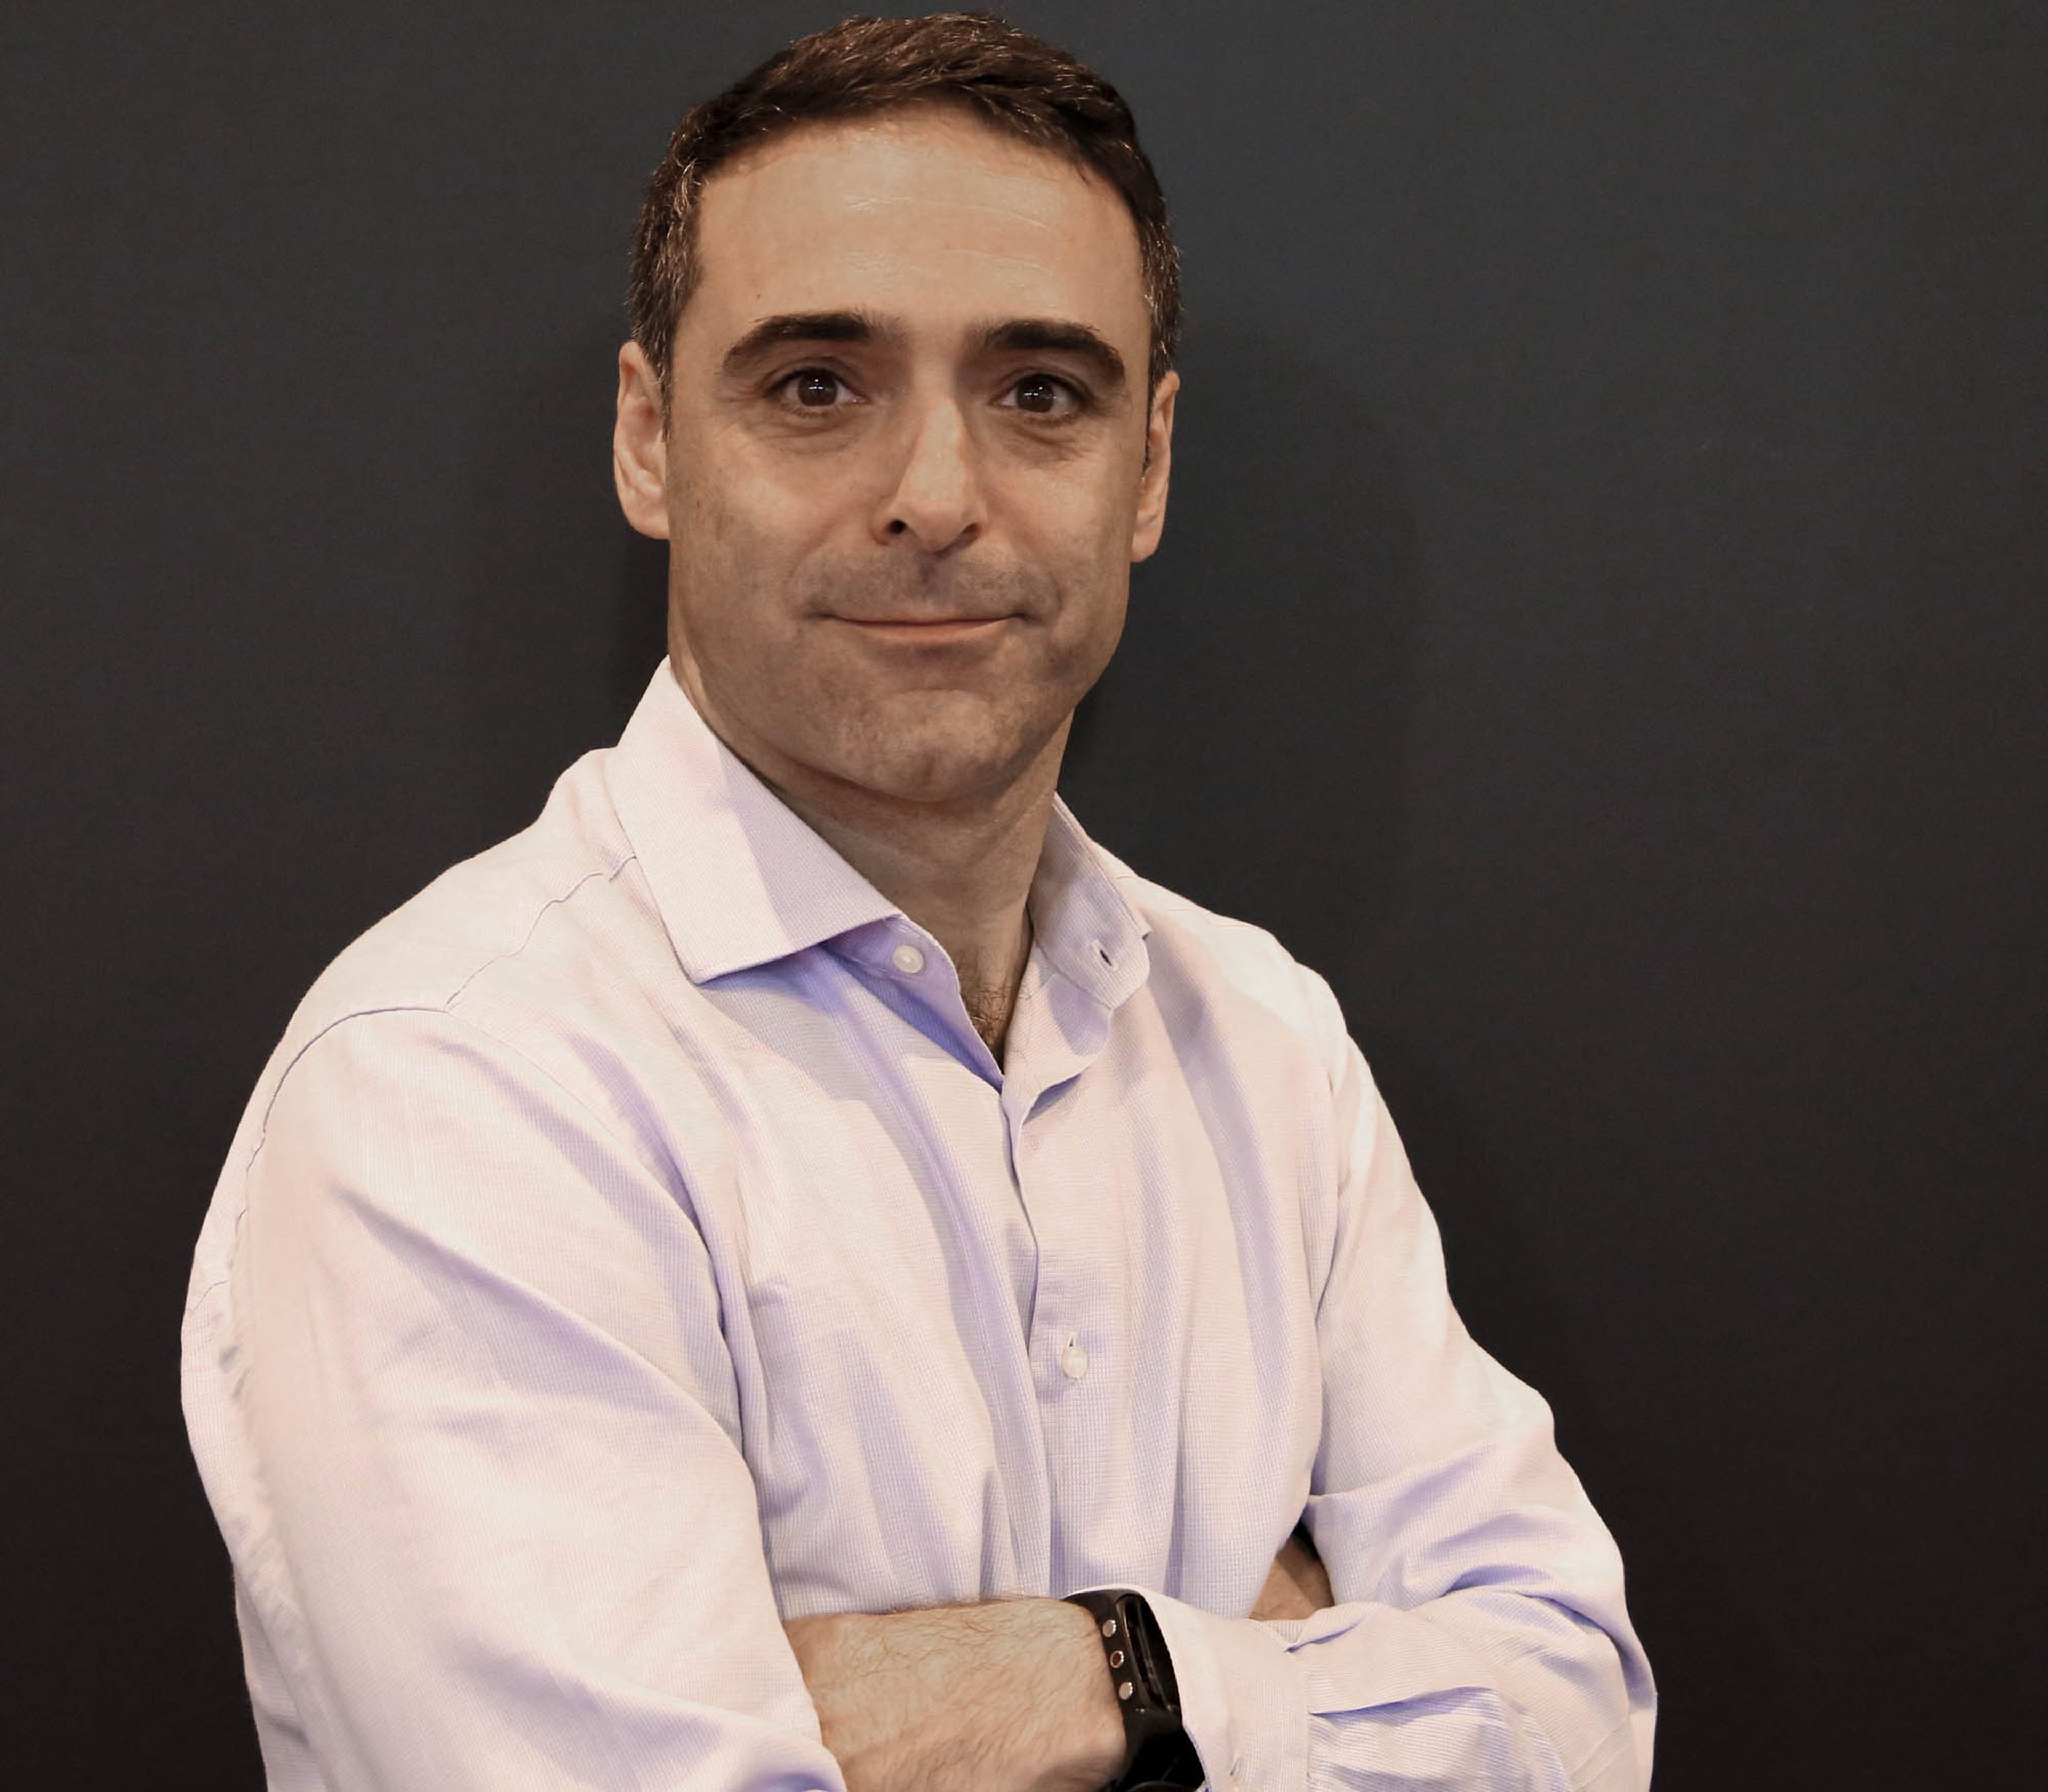 Jaume Portell, CEO de Beabloo